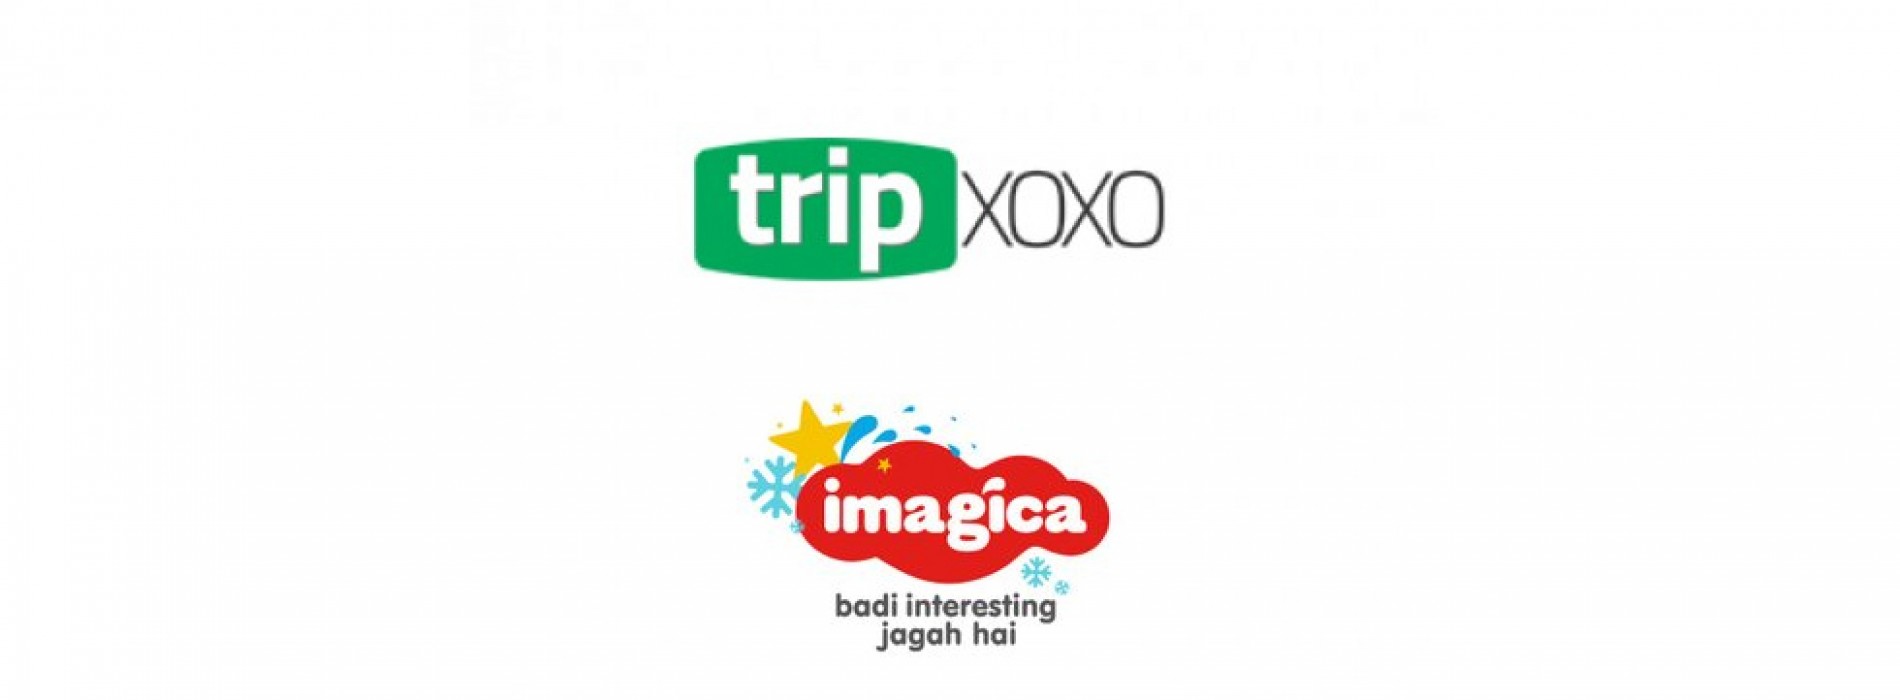 TripXOXO ties-up with Imagica